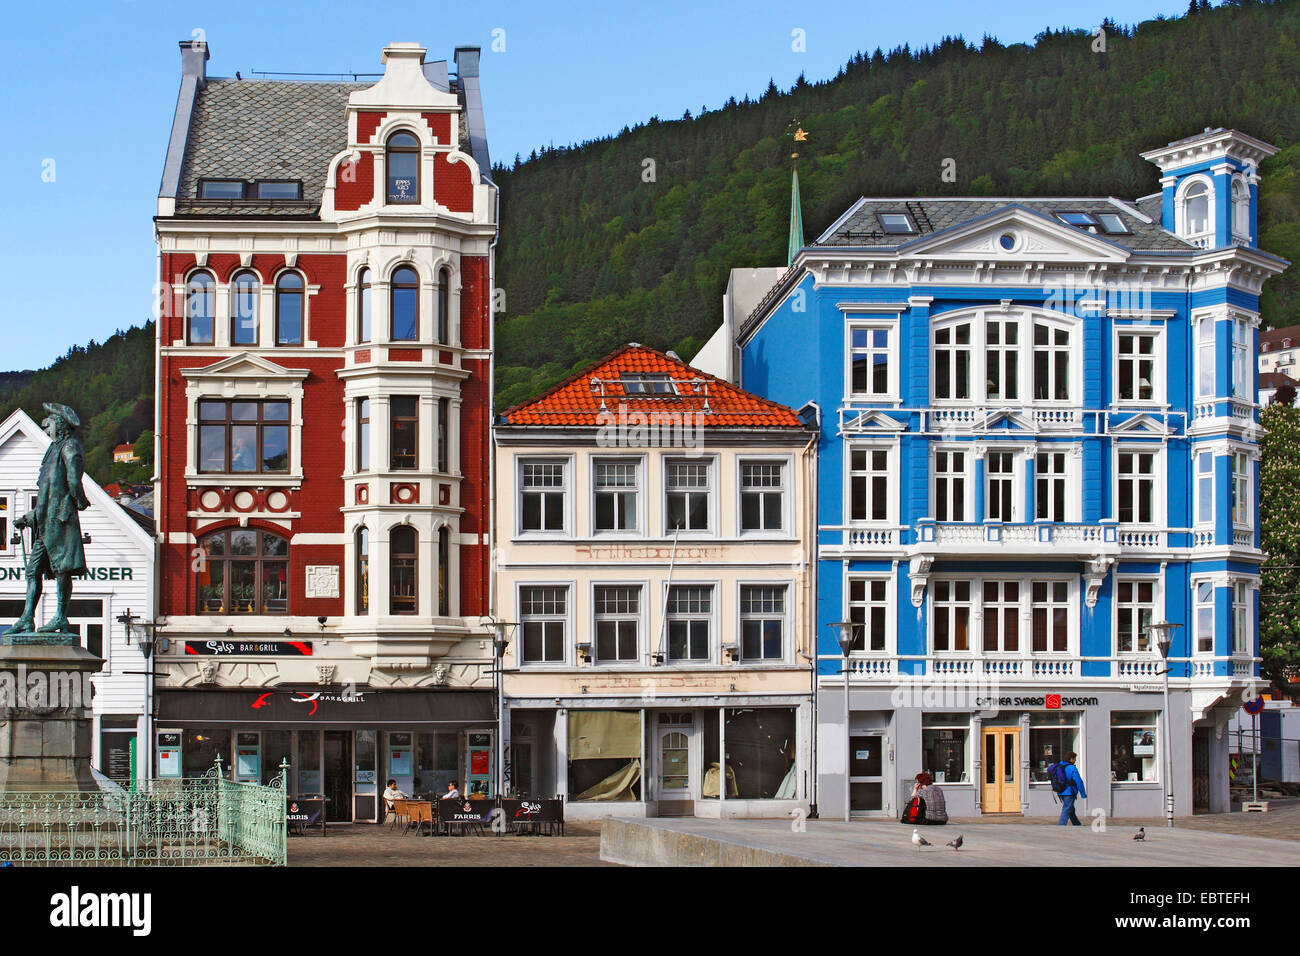 old buildings in inner city, Norway, Bergen Stock Photo - Alamy